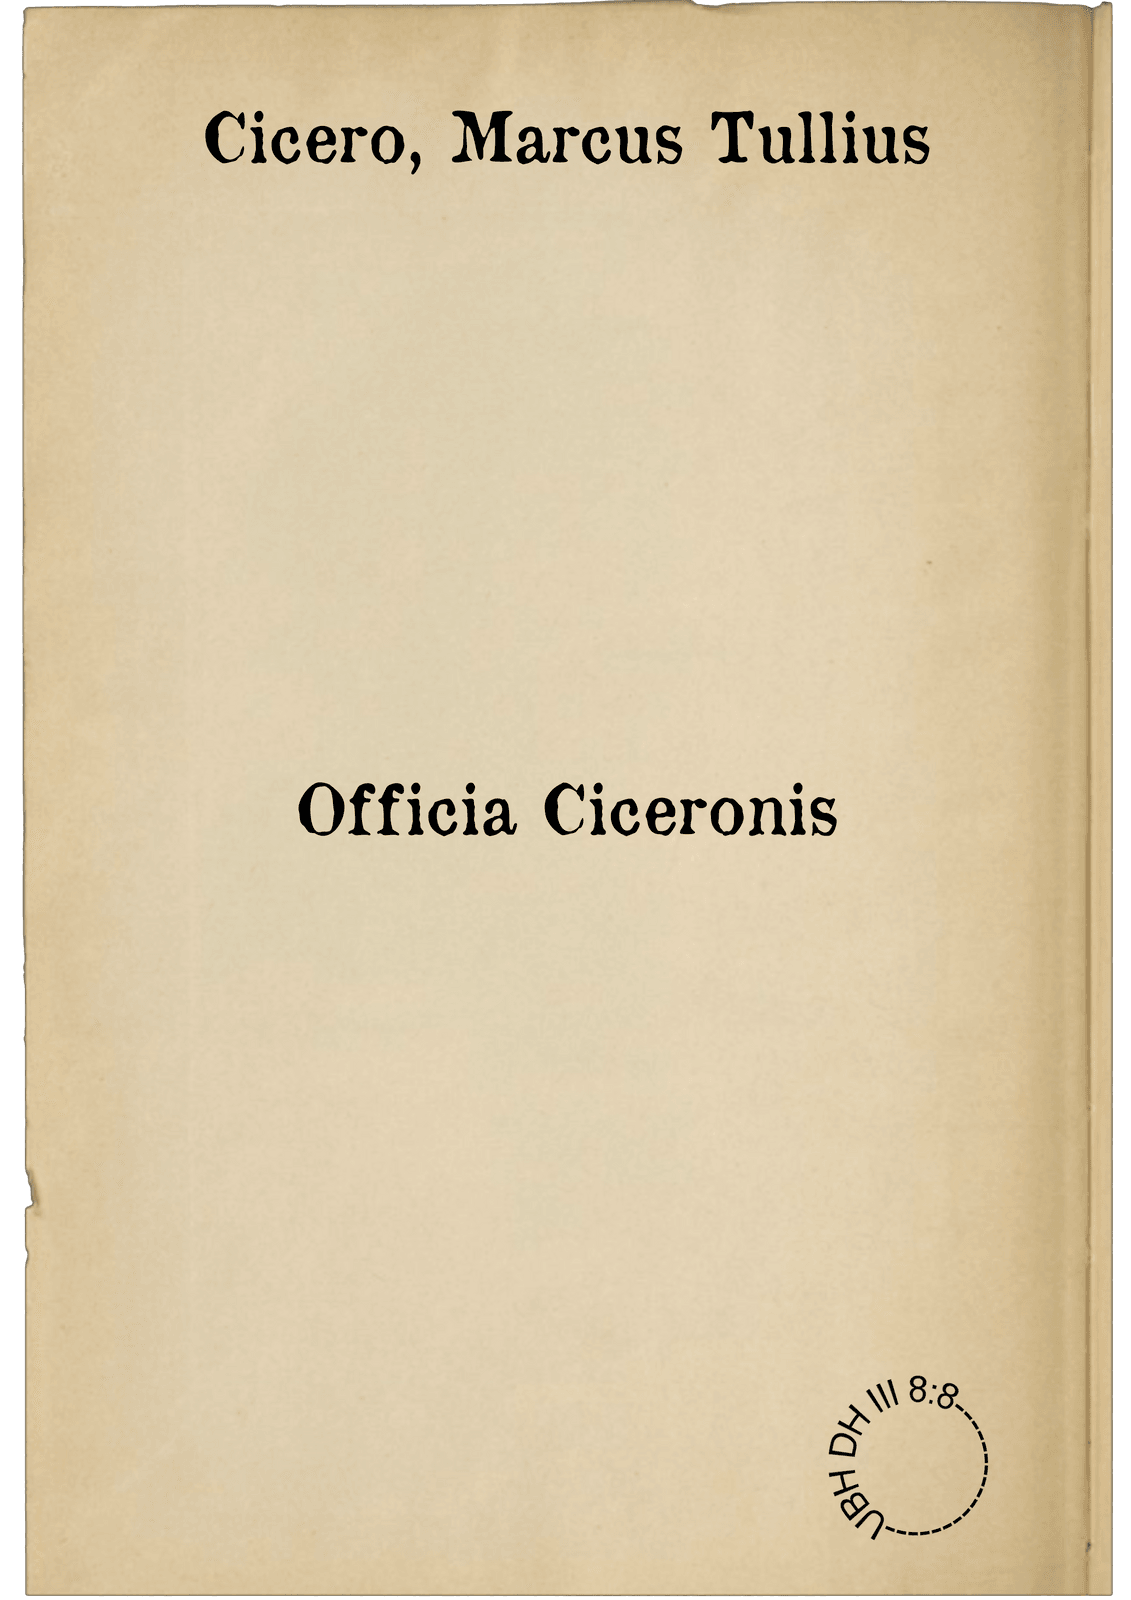 Officia Ciceronis